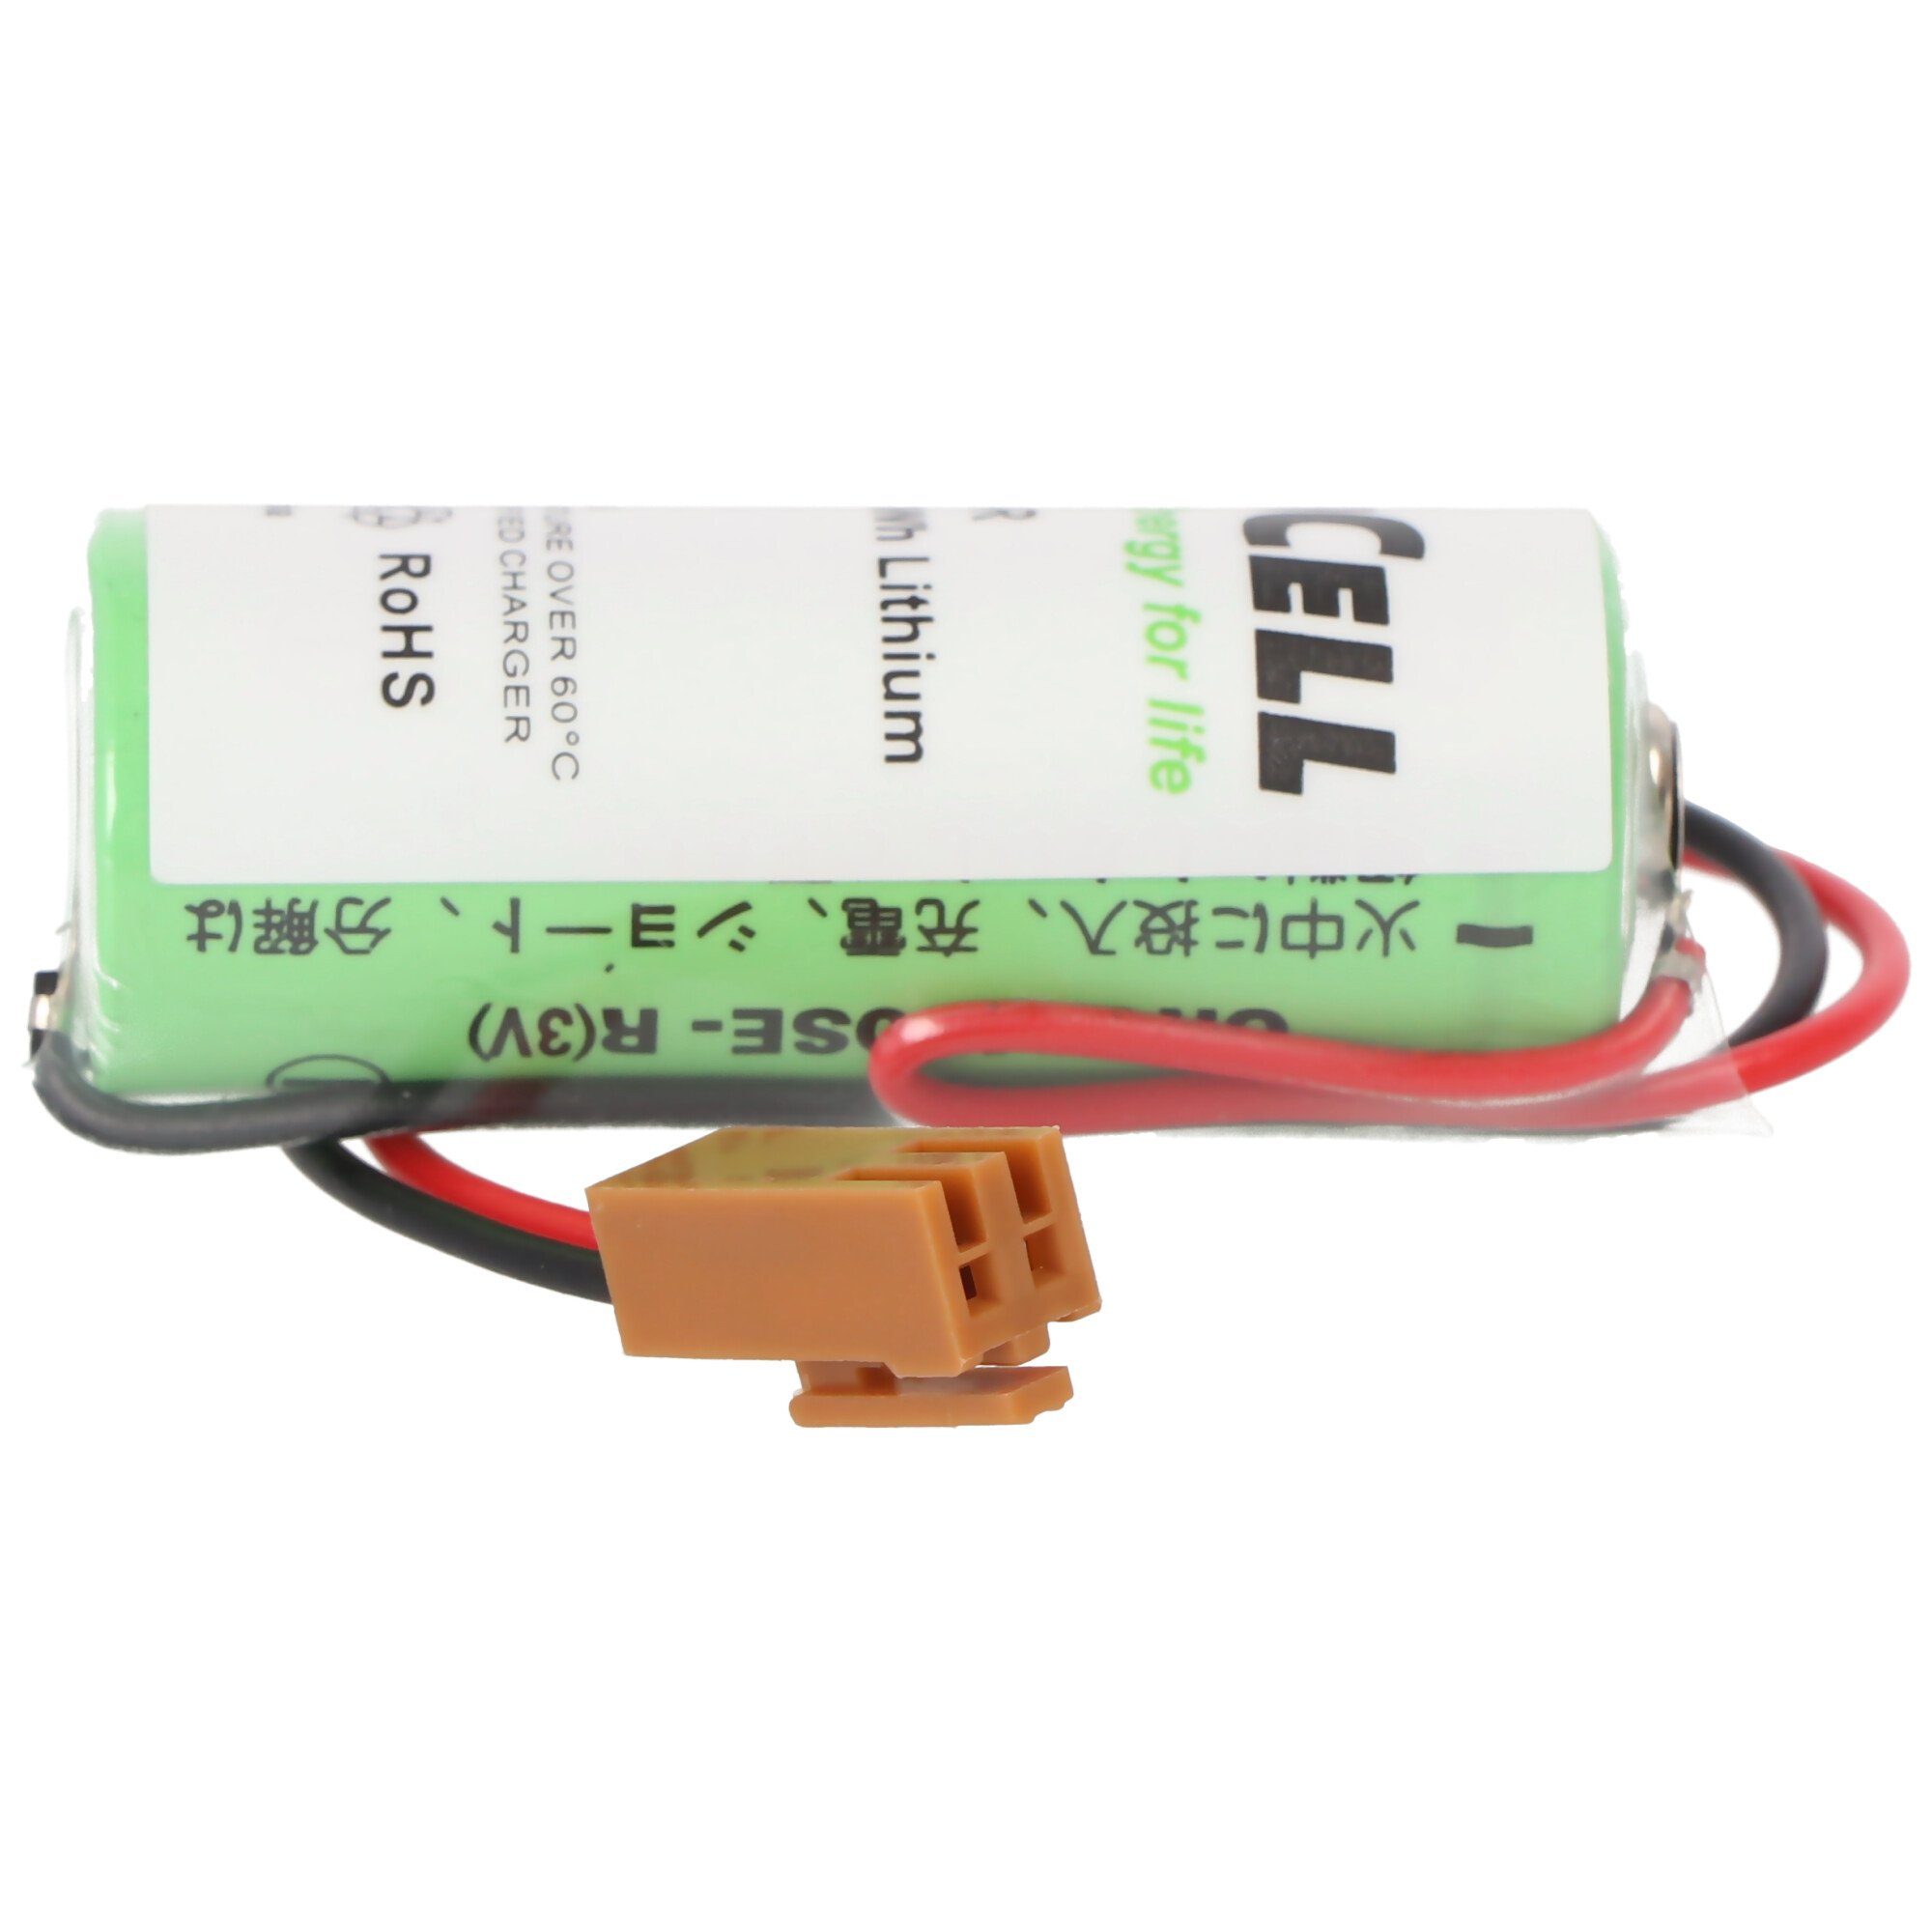 Sanyo Lithium Batterie V) St Size mit CR17450E-R Kabel Batterie, und LX98L-0031-0012, A, (3,0